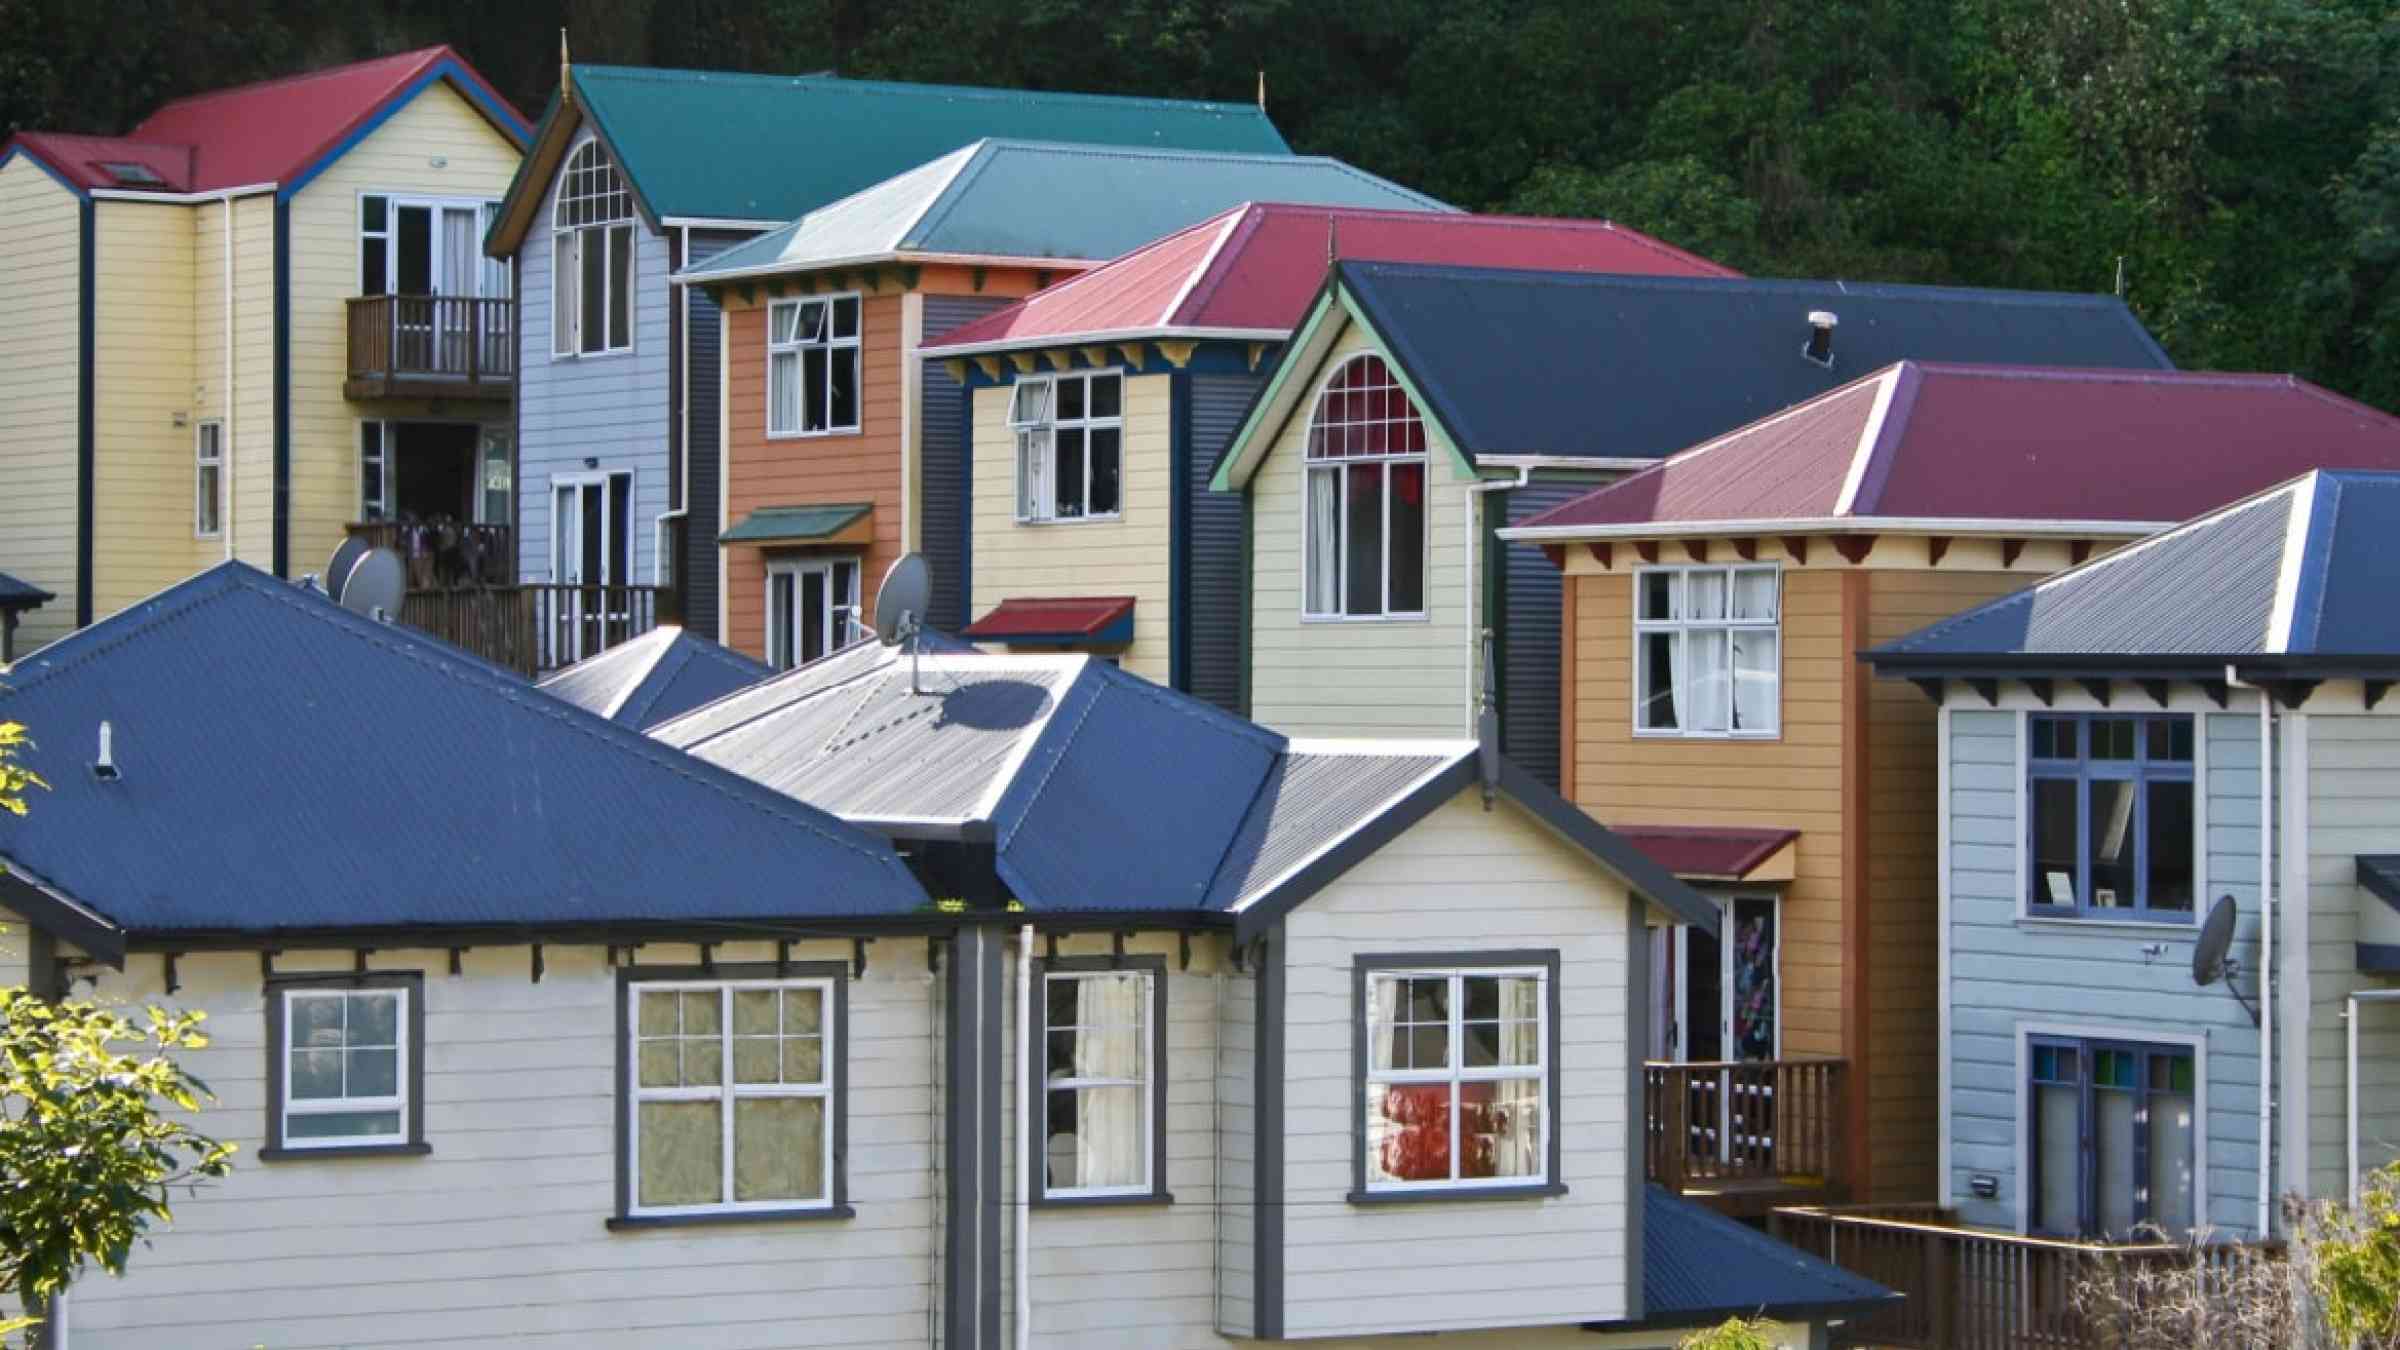 Neighborhood with colorful houses in New Zealand.